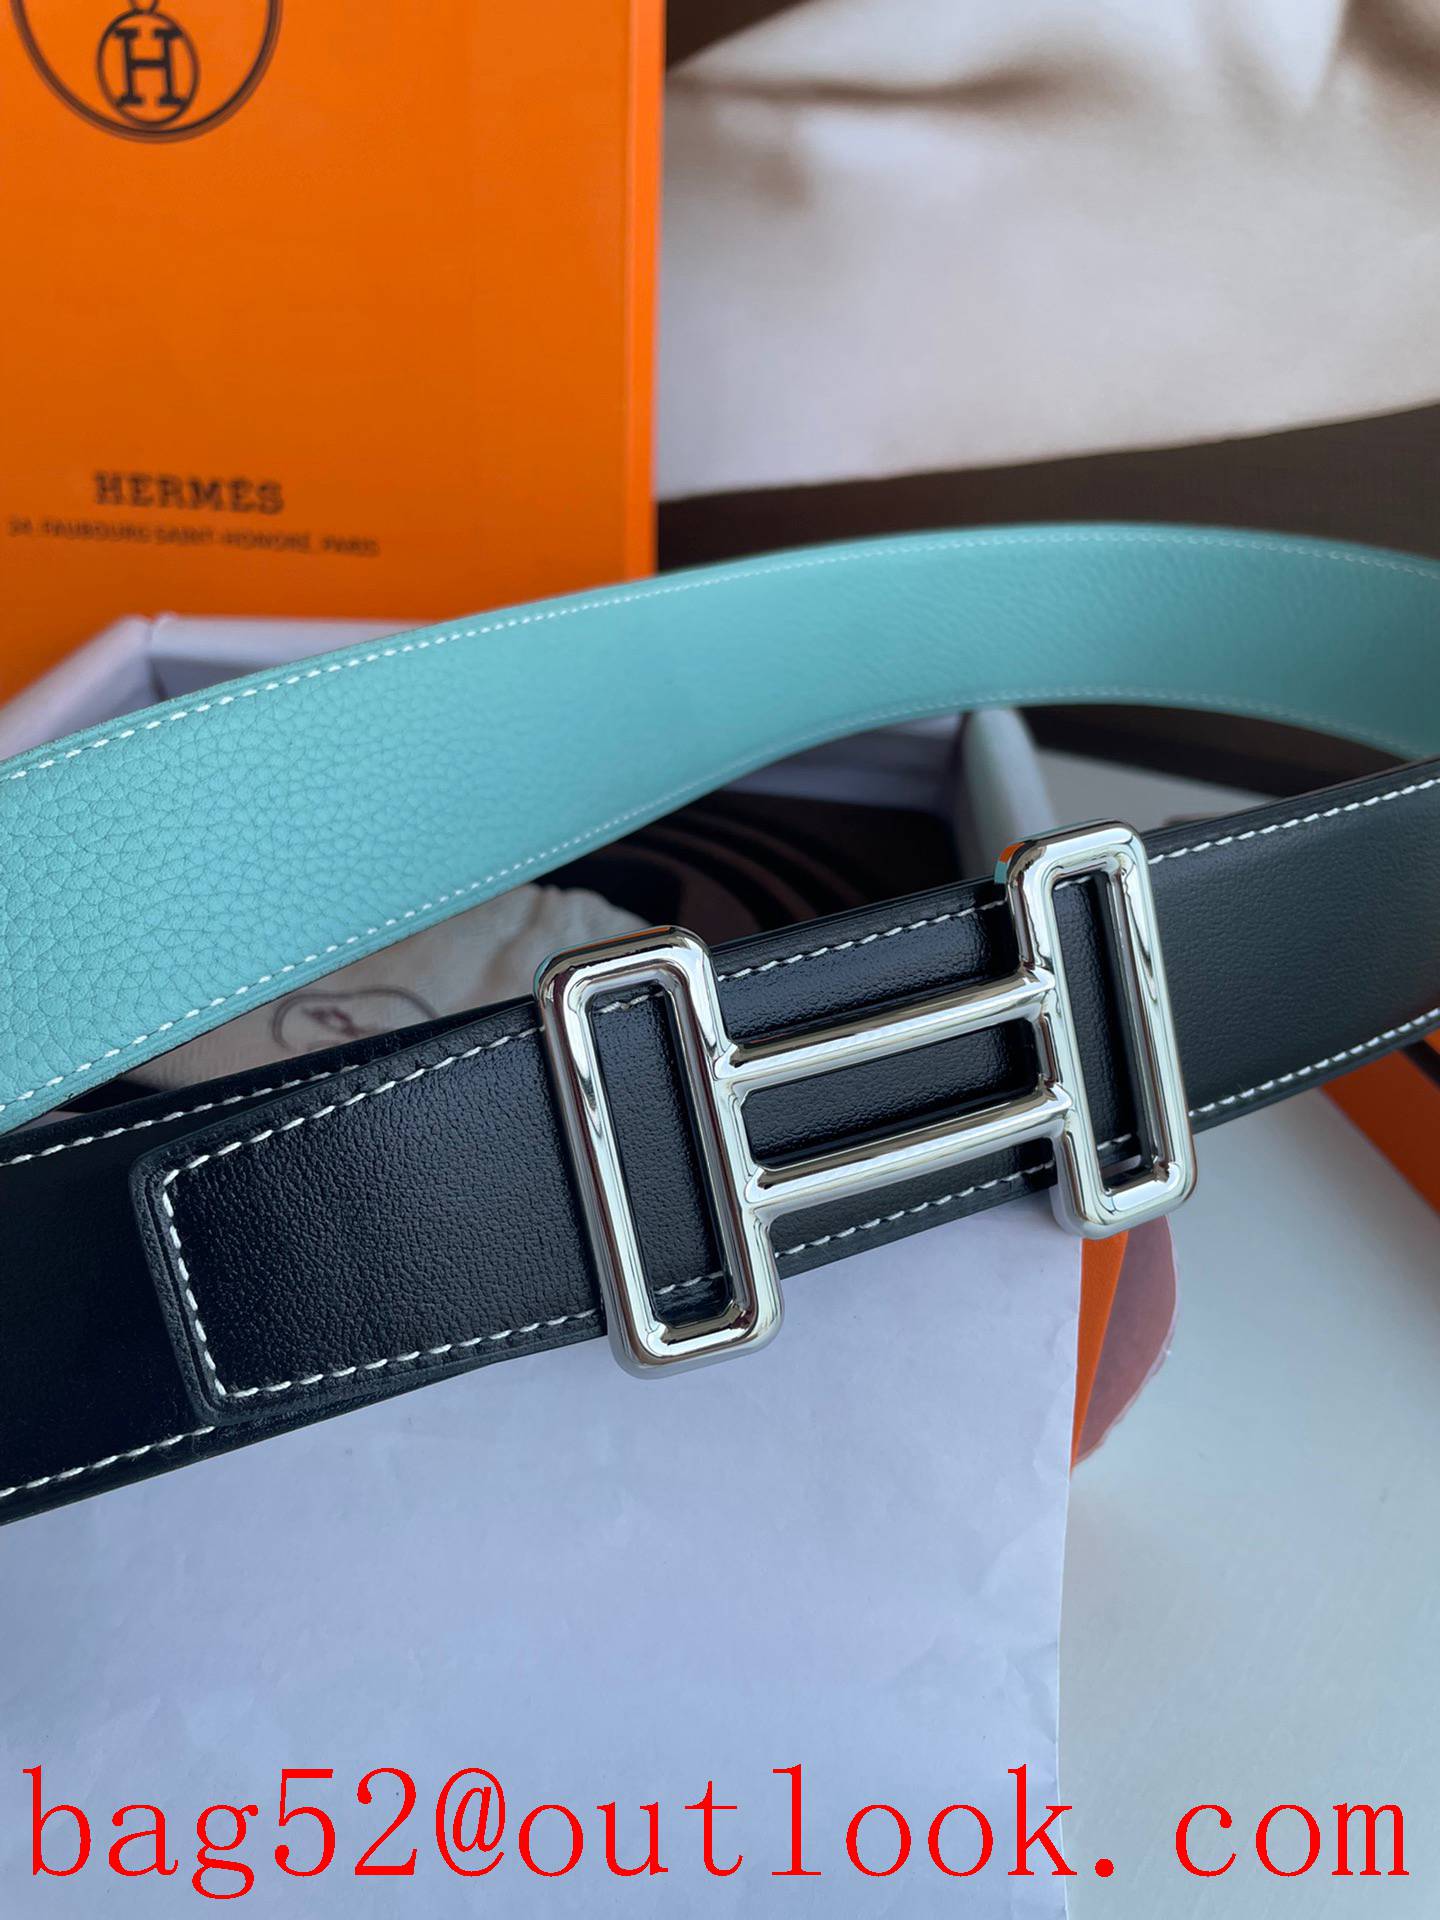 Hermes giant trend of color convergence belt